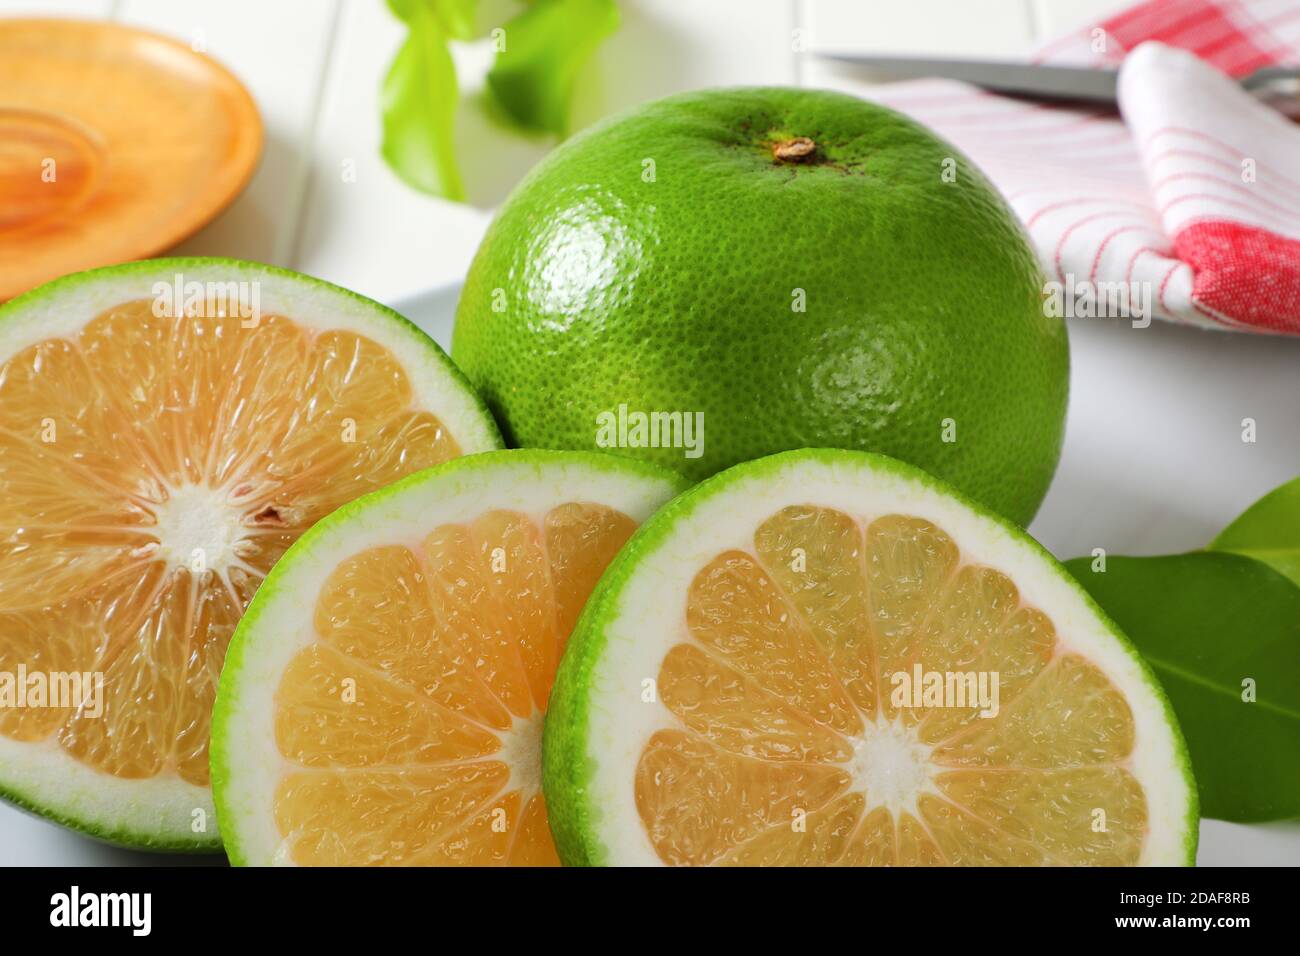 Sweetie fruit (green grapefruit, pomelit) - whole fruit and slices Stock Photo